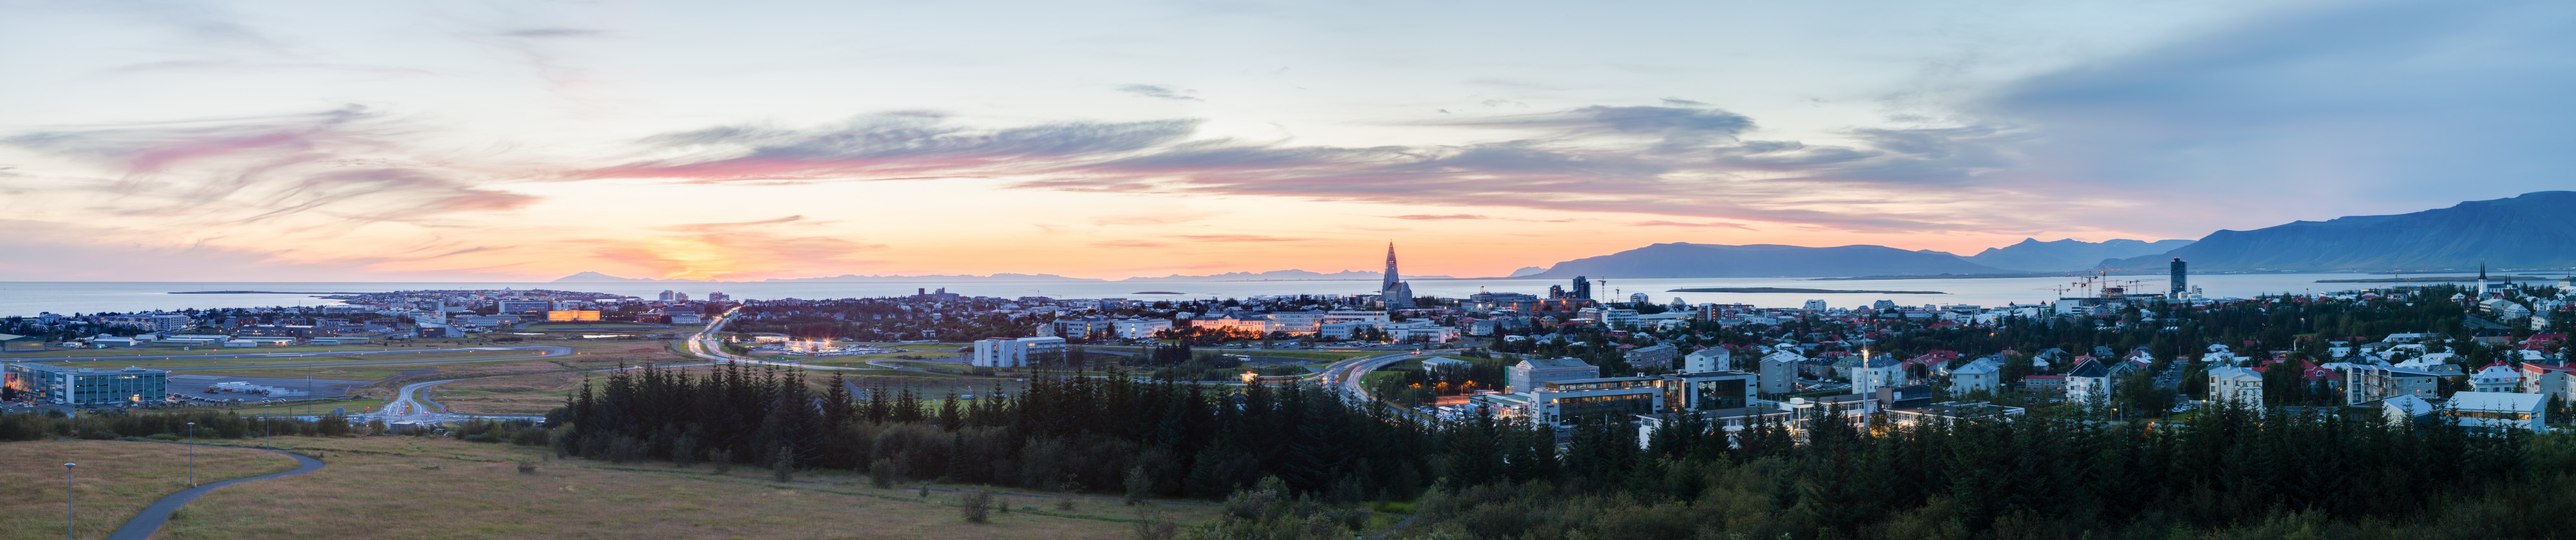 Vista de Reikiavik desde Perlan, Distrito de la Capital, Islandia, 2014-08-13, DD 134-145 HDR PAN